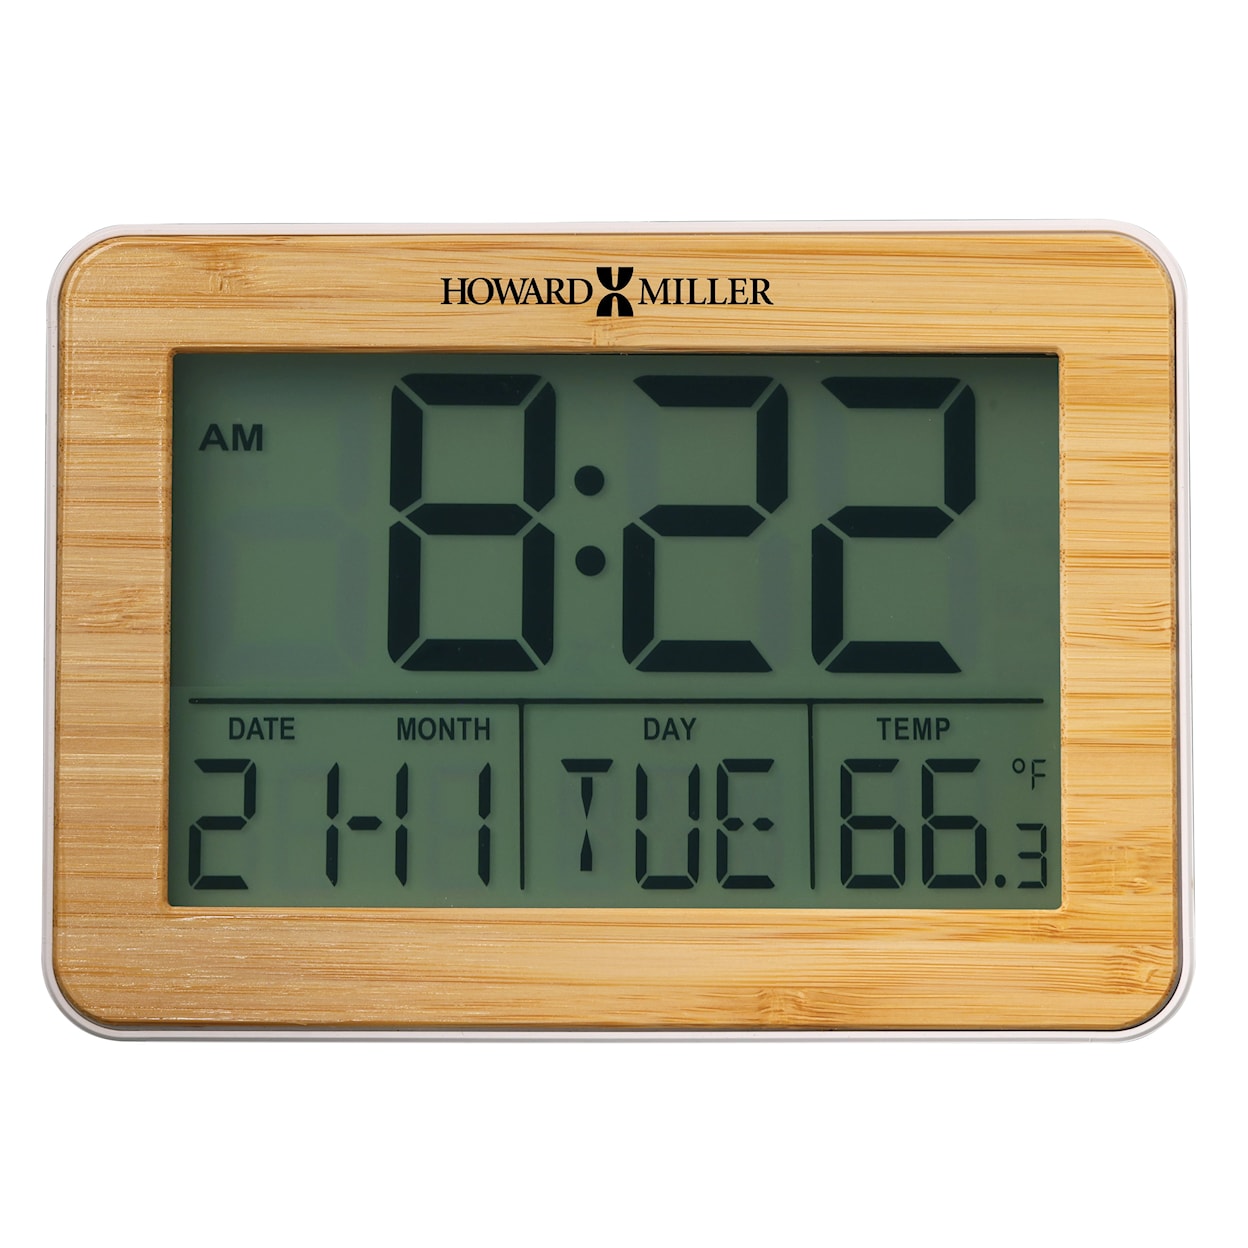 Howard Miller Howard Miller Alarm Clock